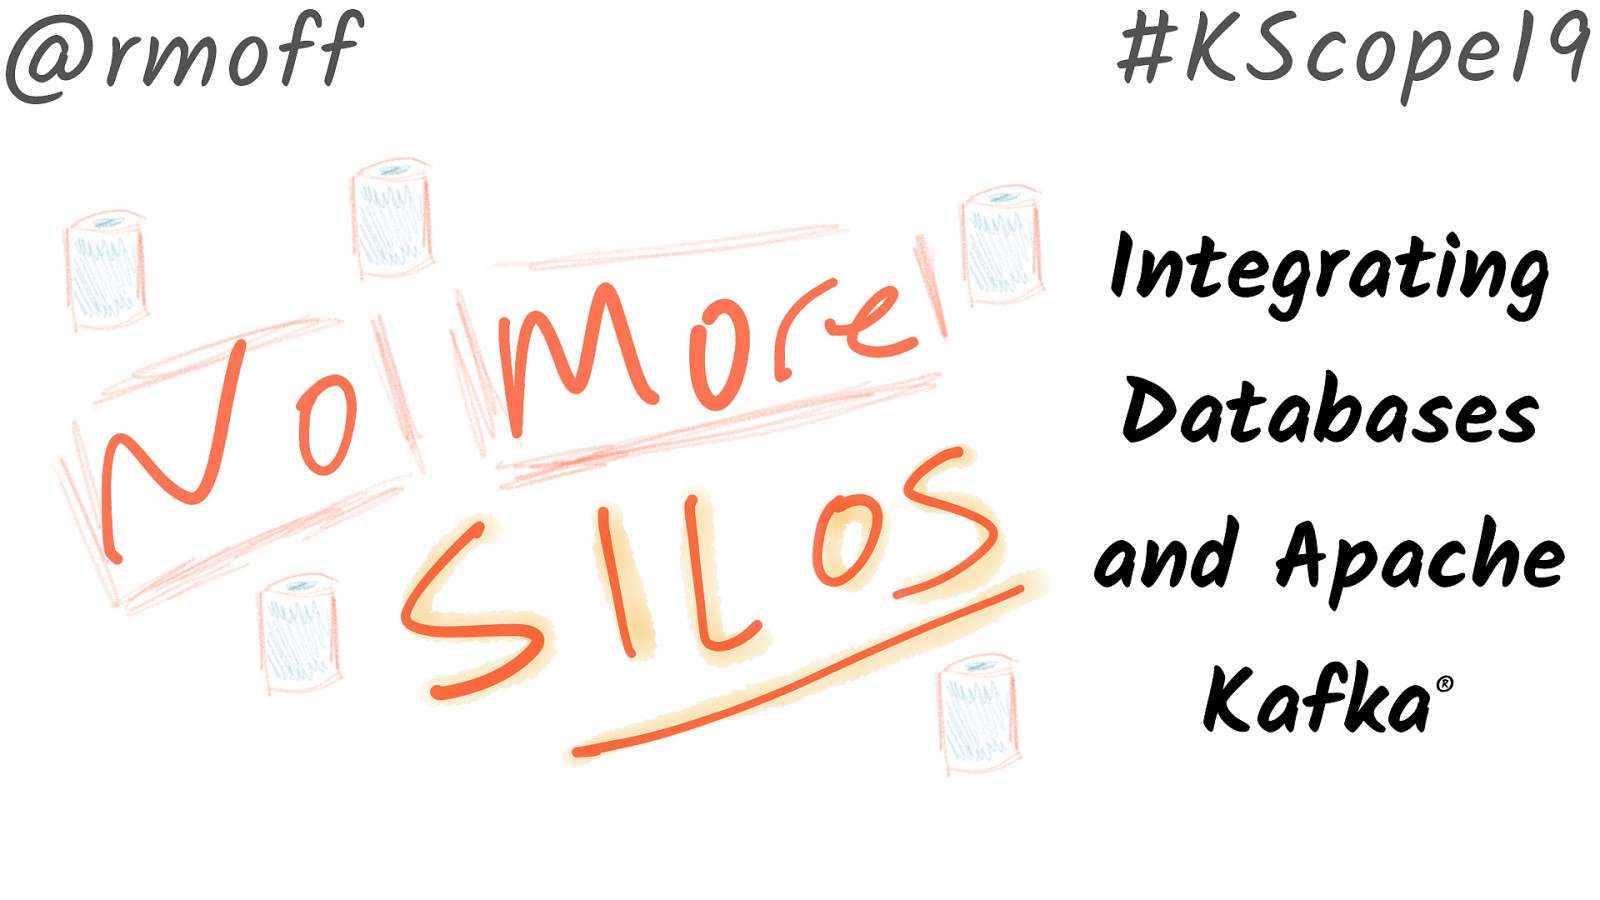 No More Silos: Integrating Databases and Apache Kafka